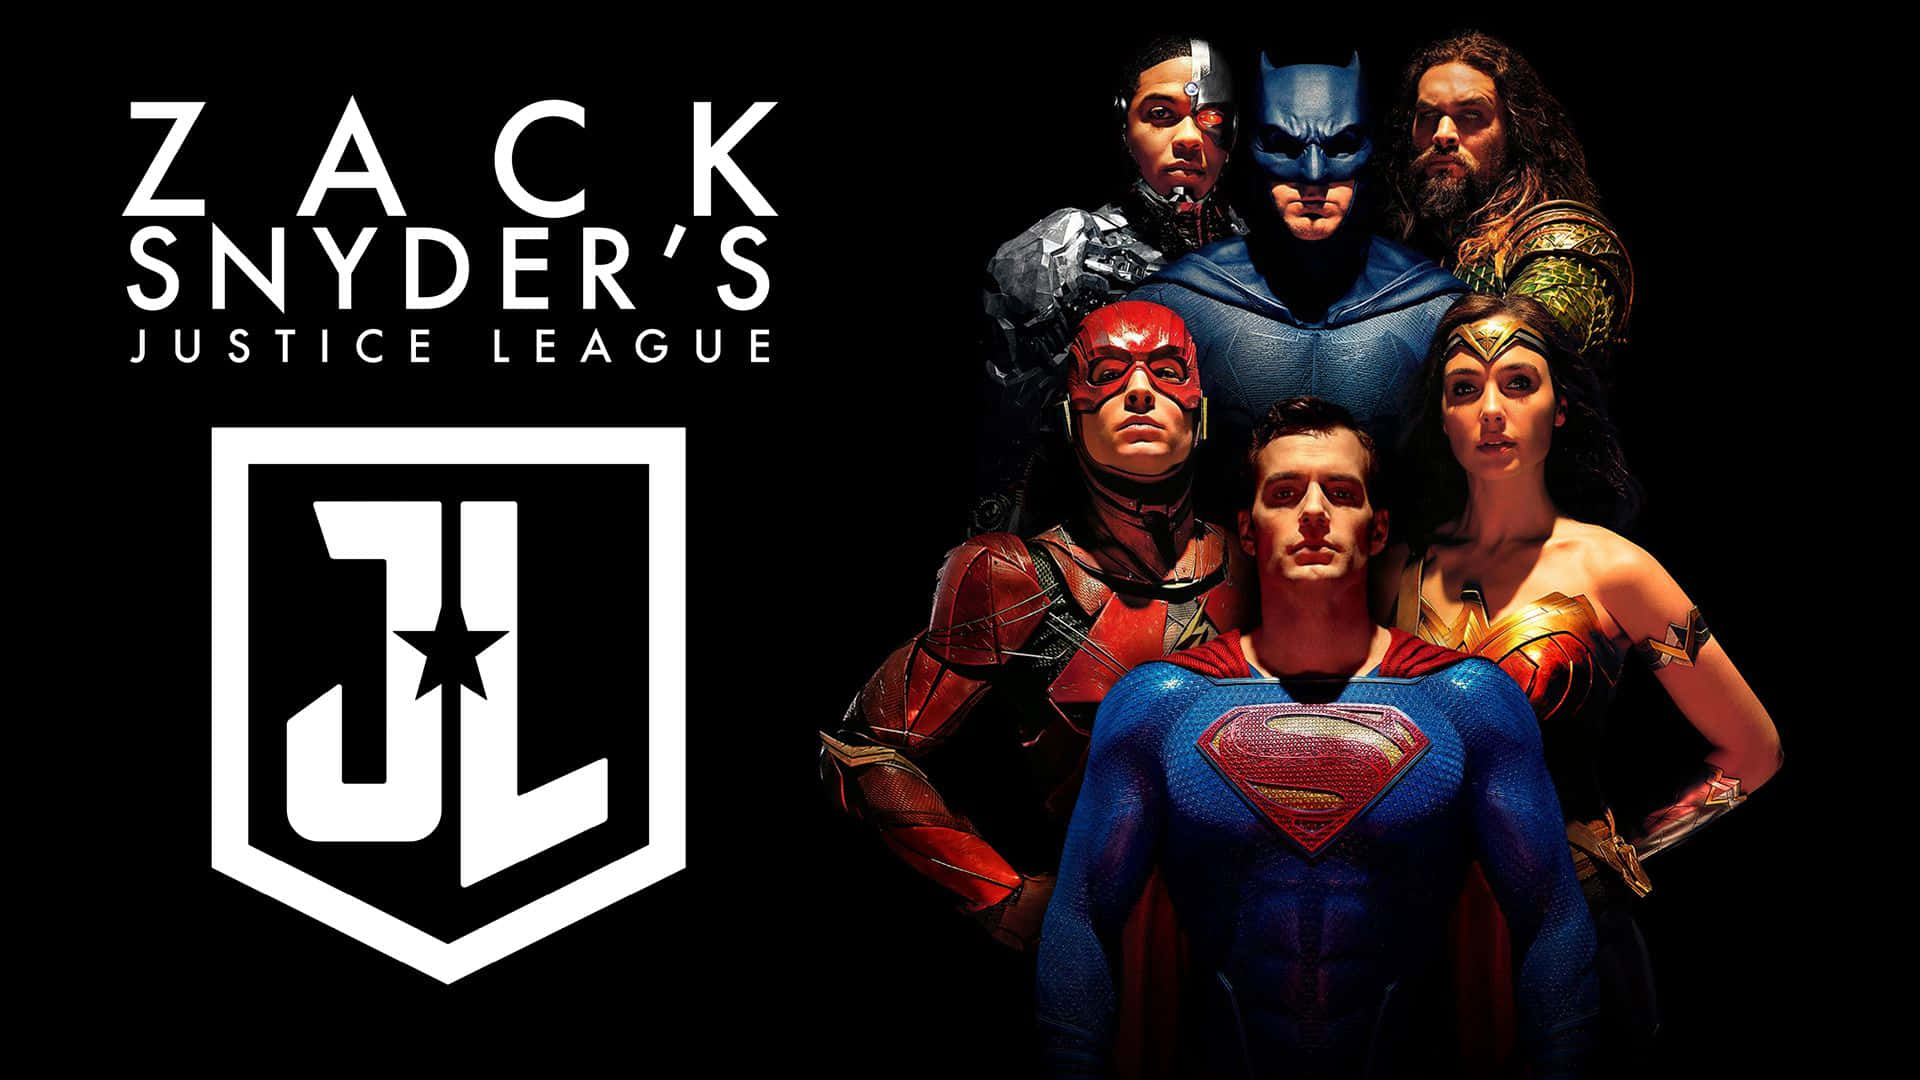 "The Justice League Unites in Zack Snyder's Film" Wallpaper